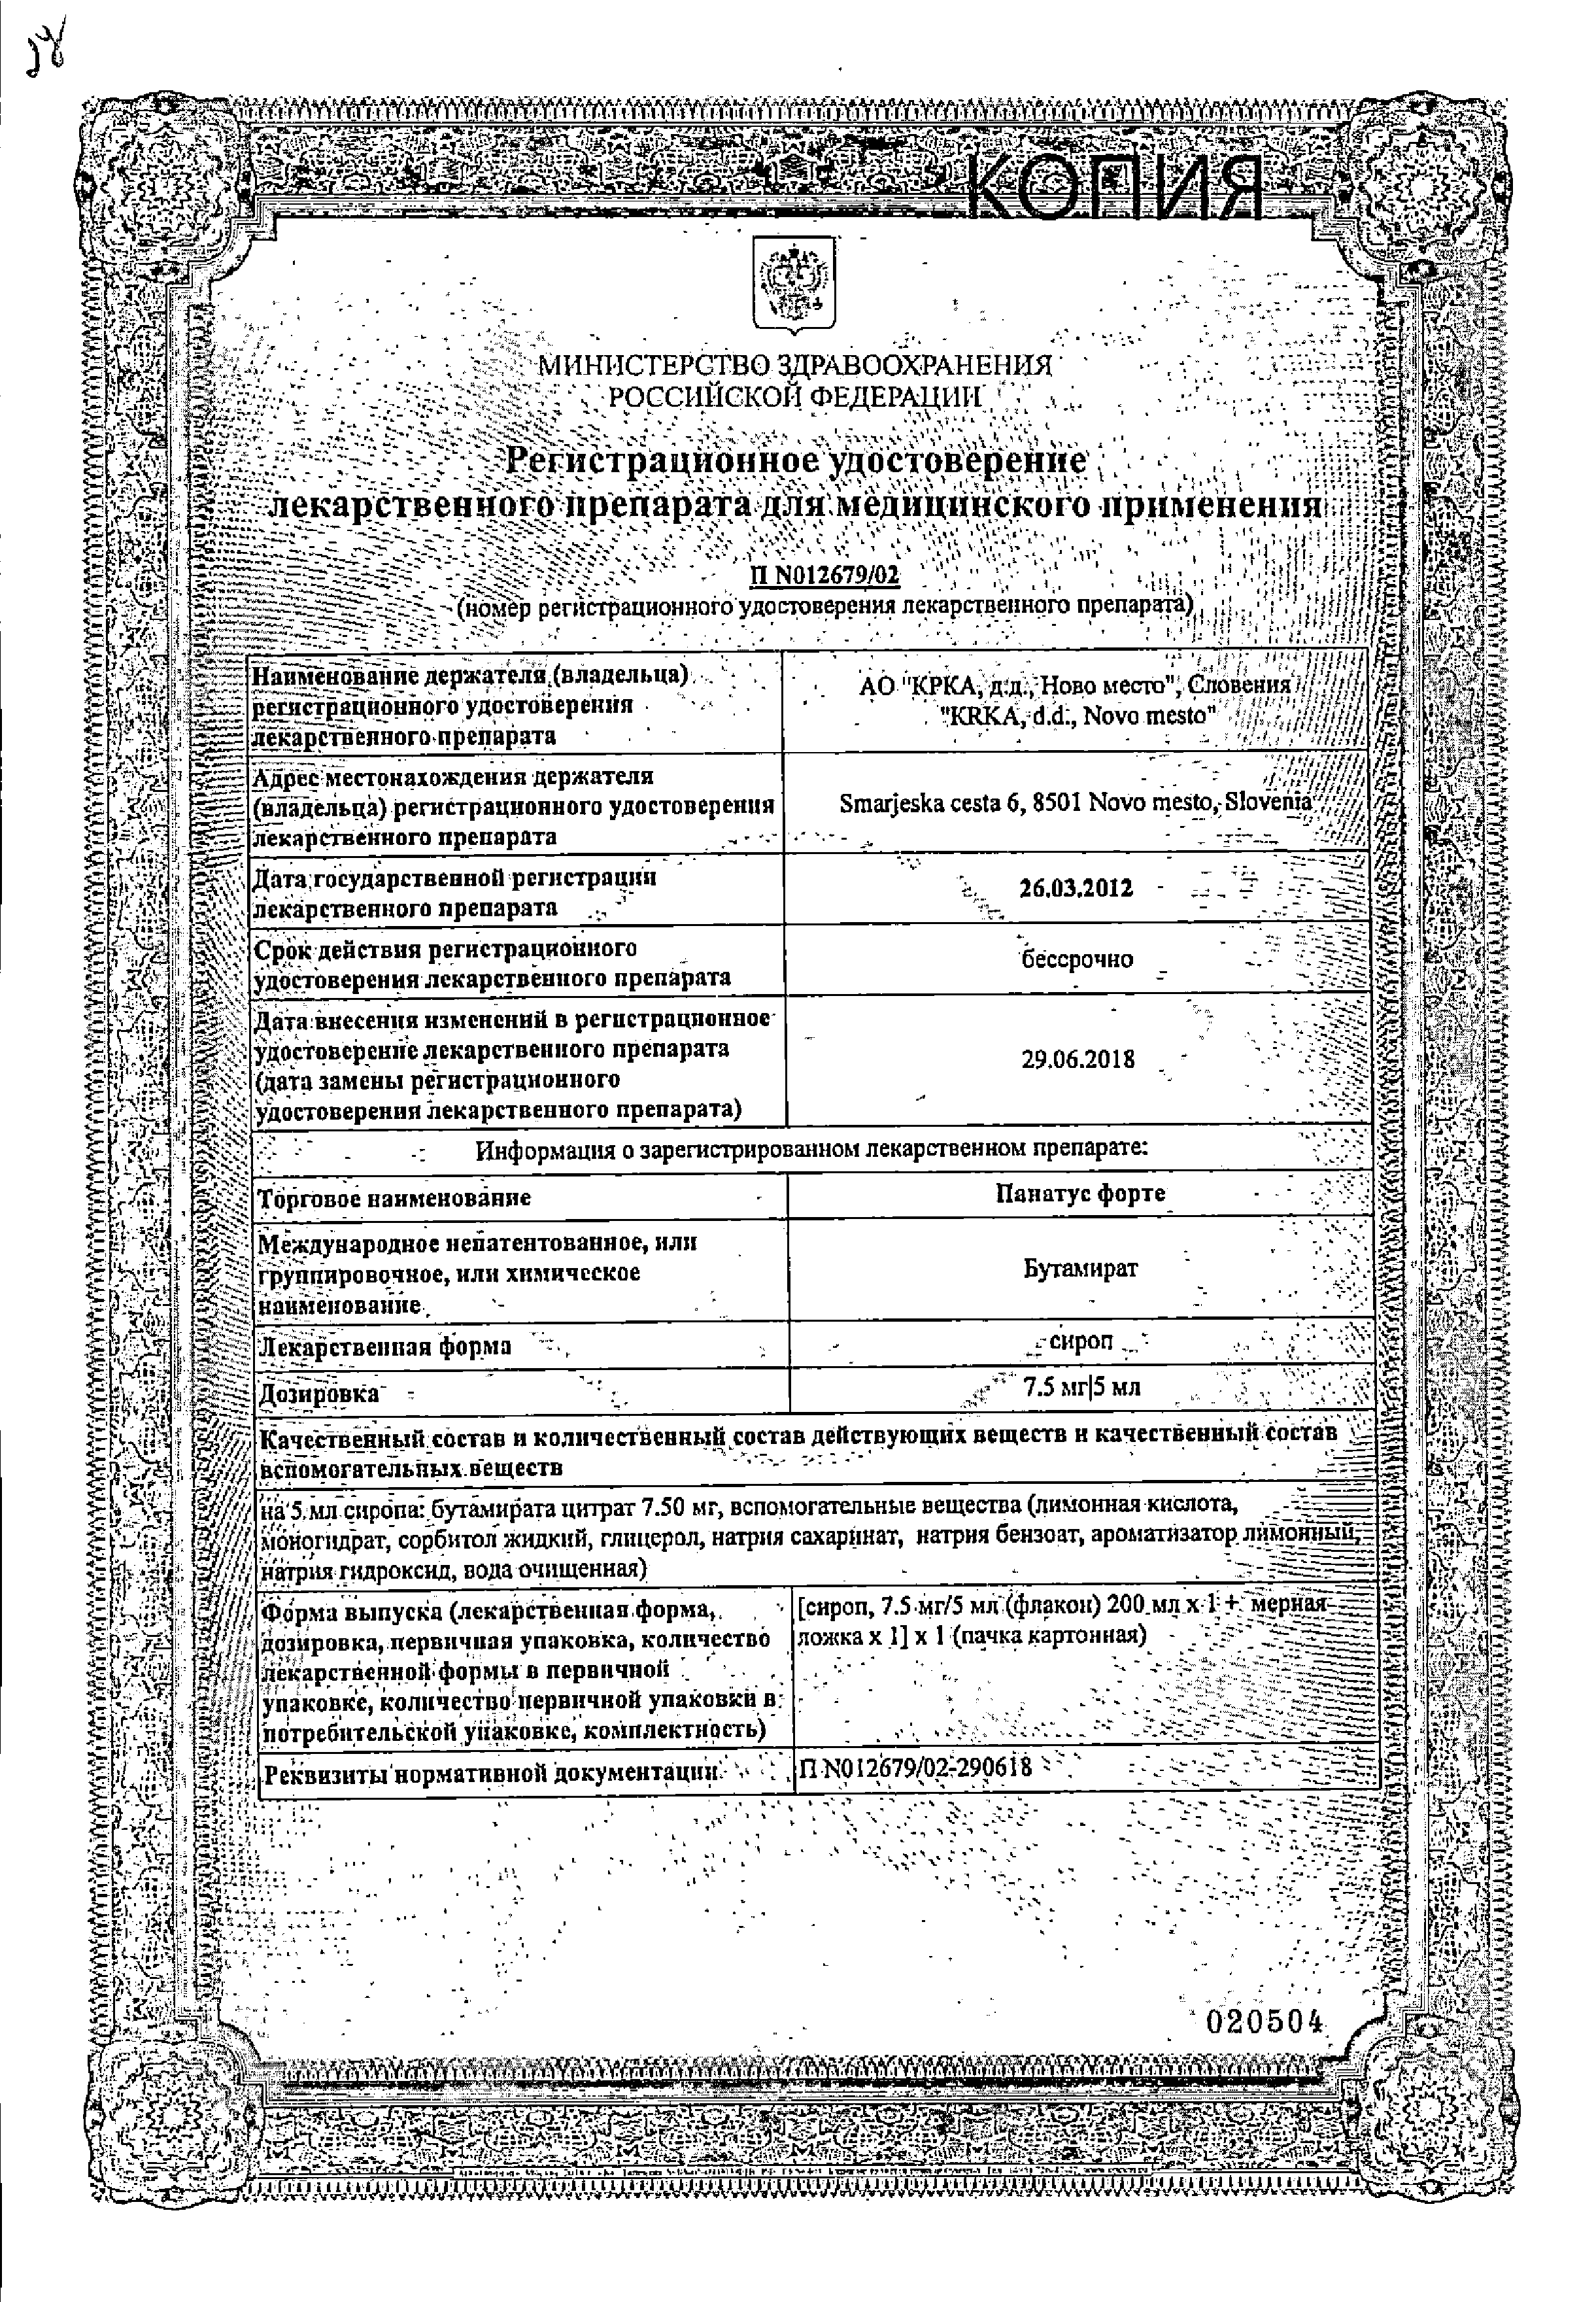 Панатус Форте сертификат